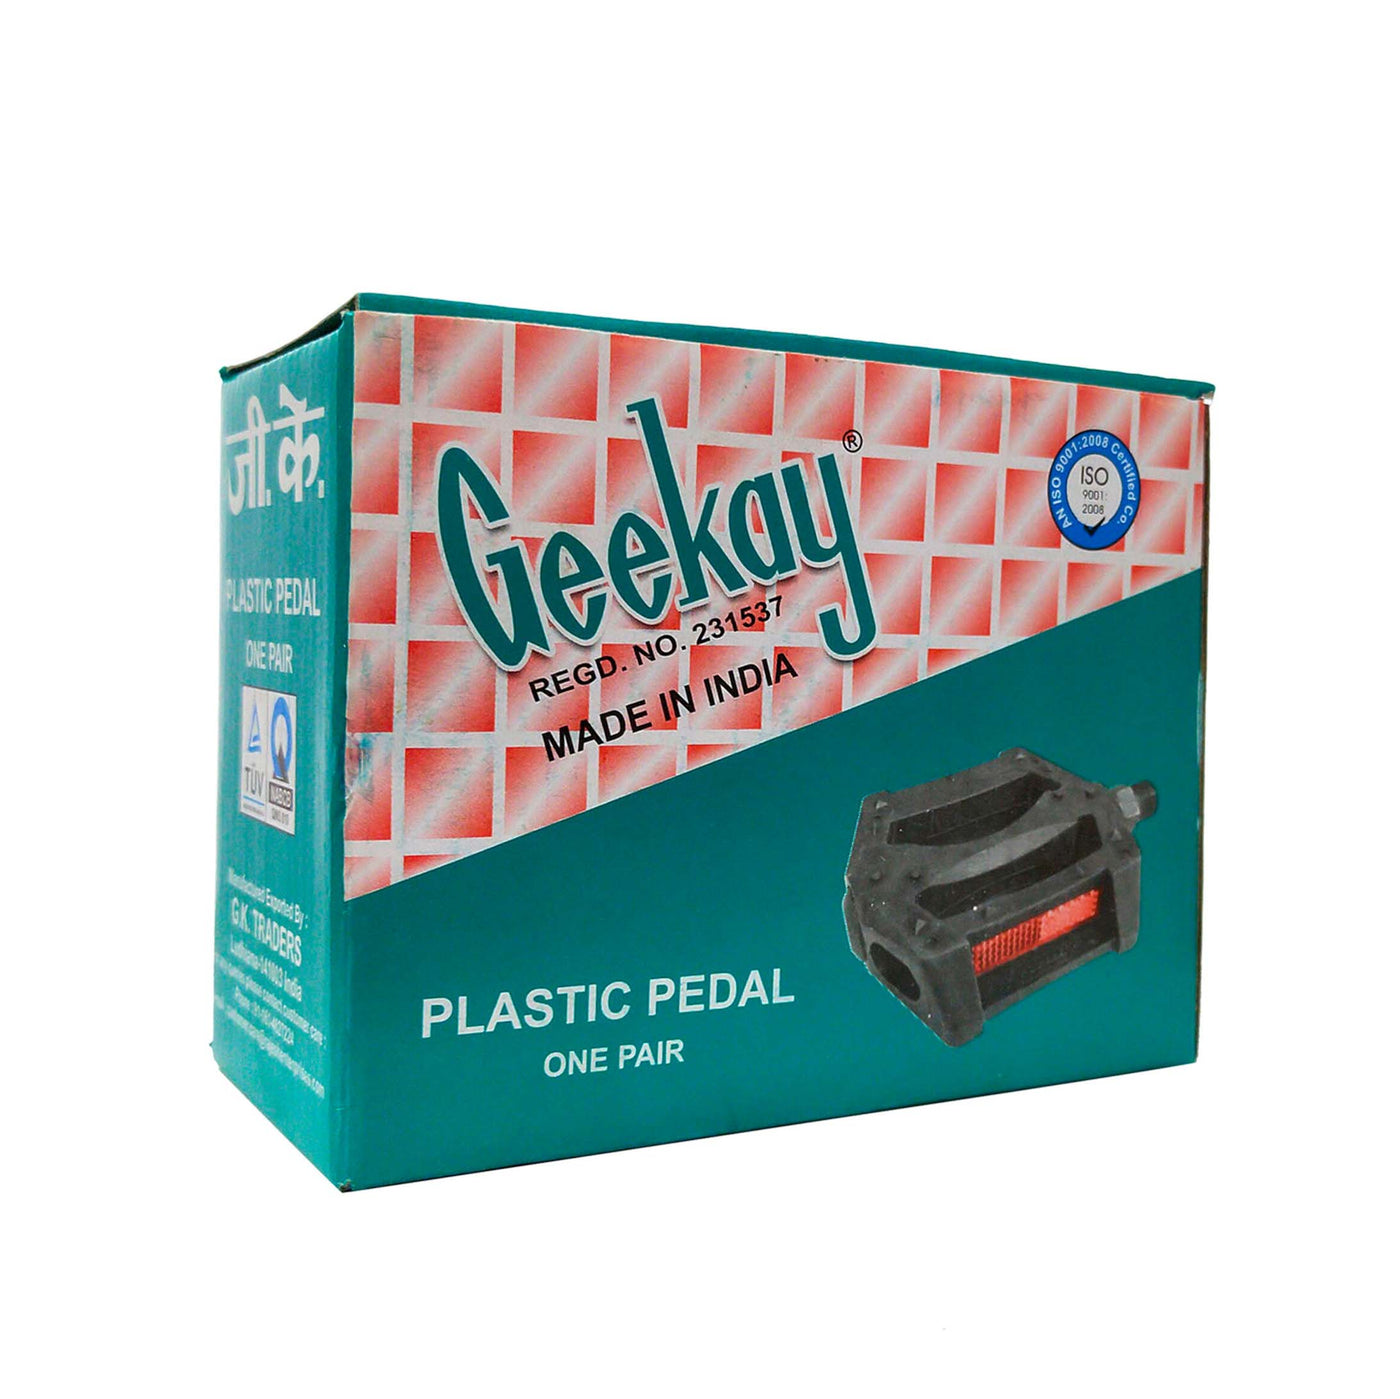 Geekay Plastic Pedals